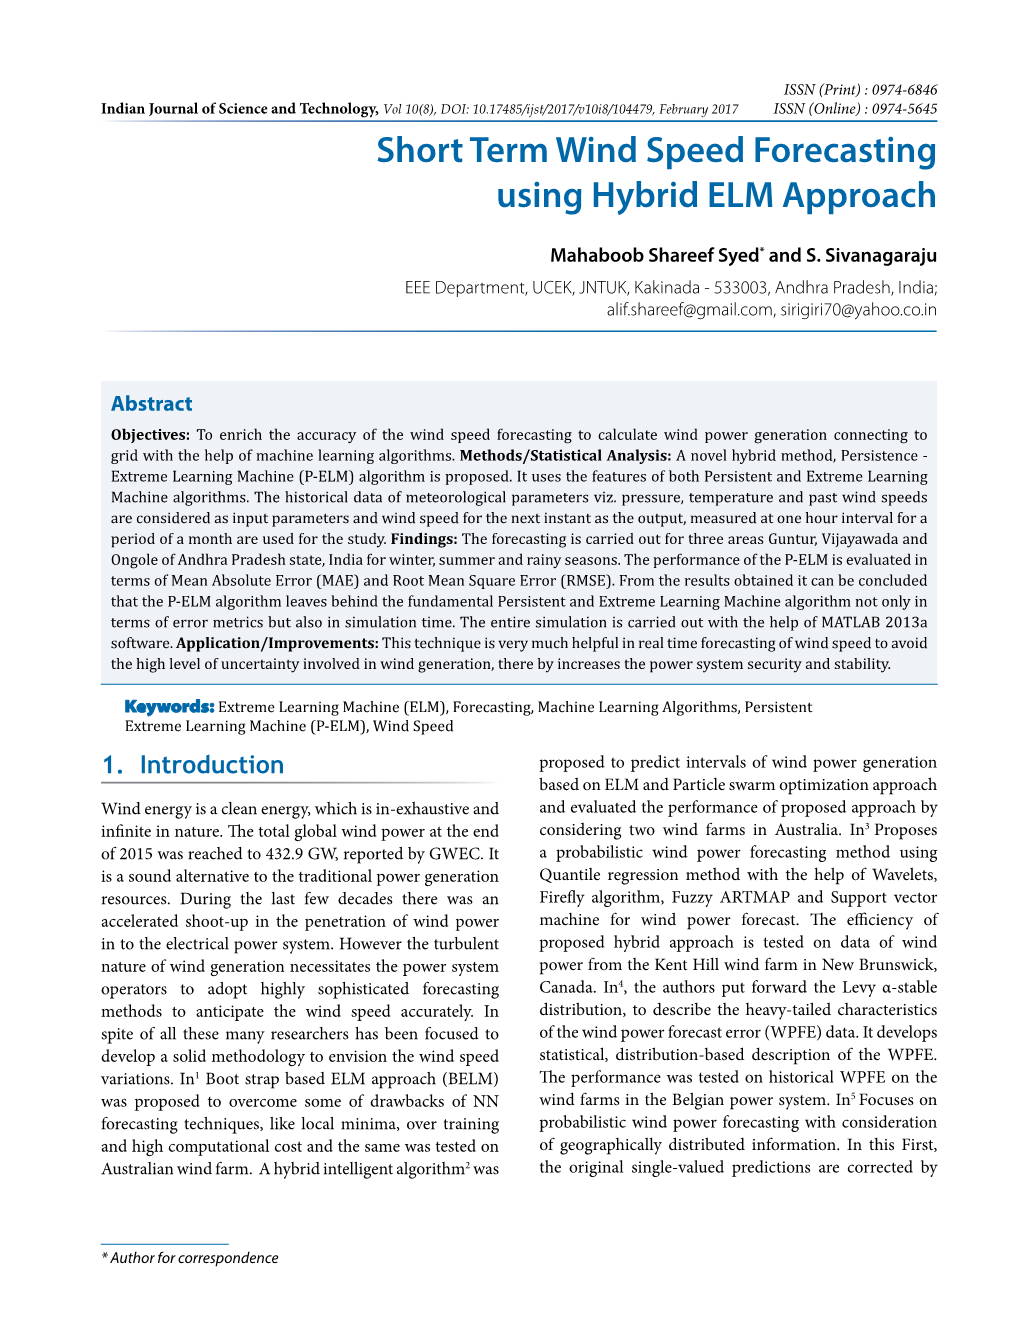 Short Term Wind Speed Forecasting Using Hybrid ELM Approach